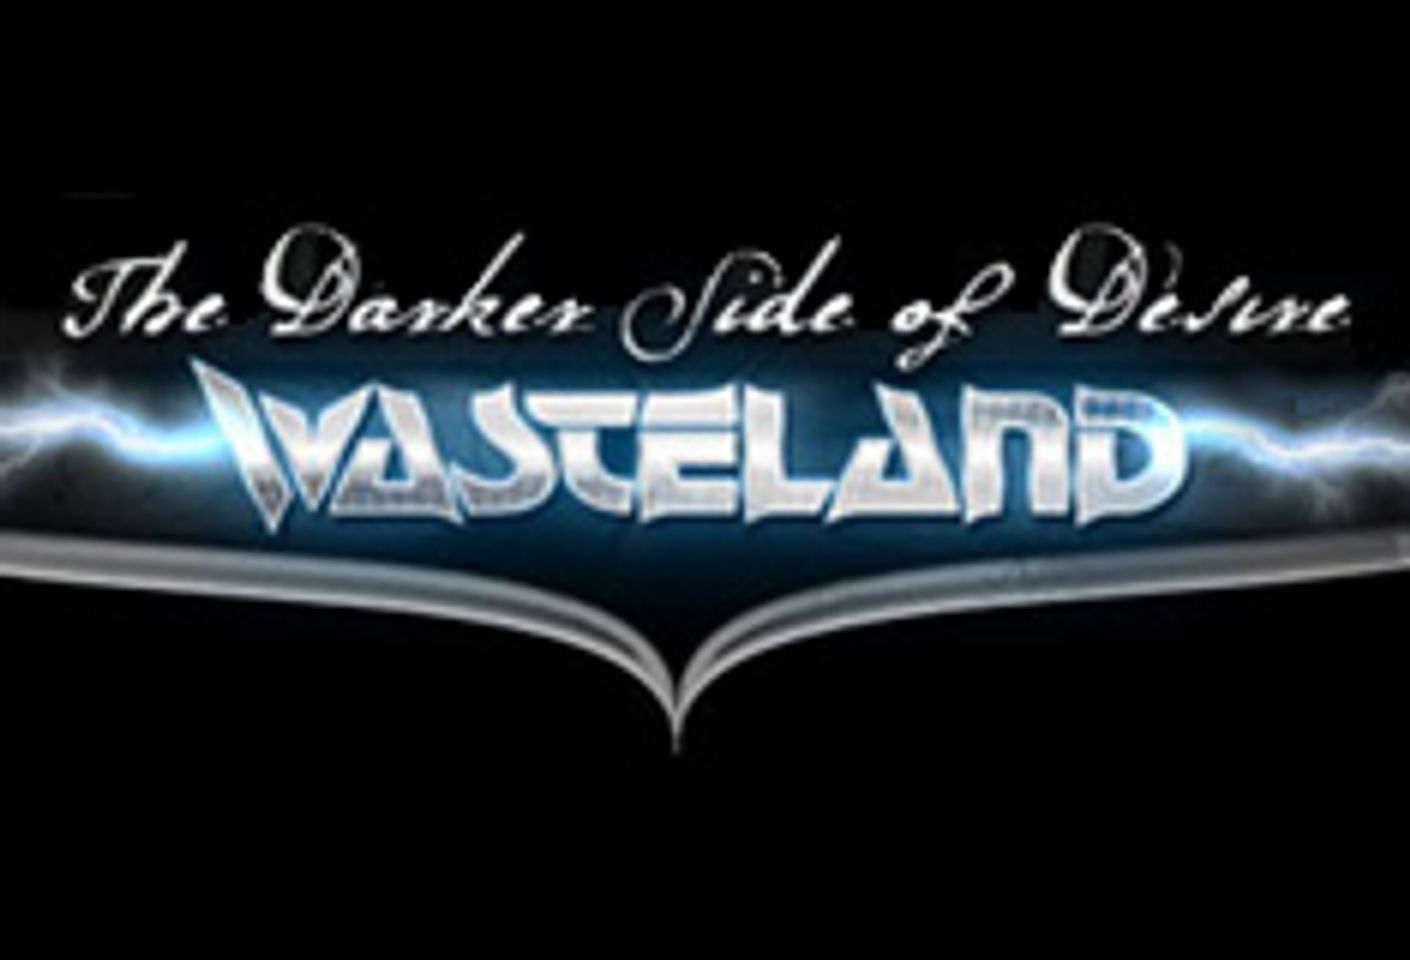 Wasteland Receives Two AVN Awards Noms